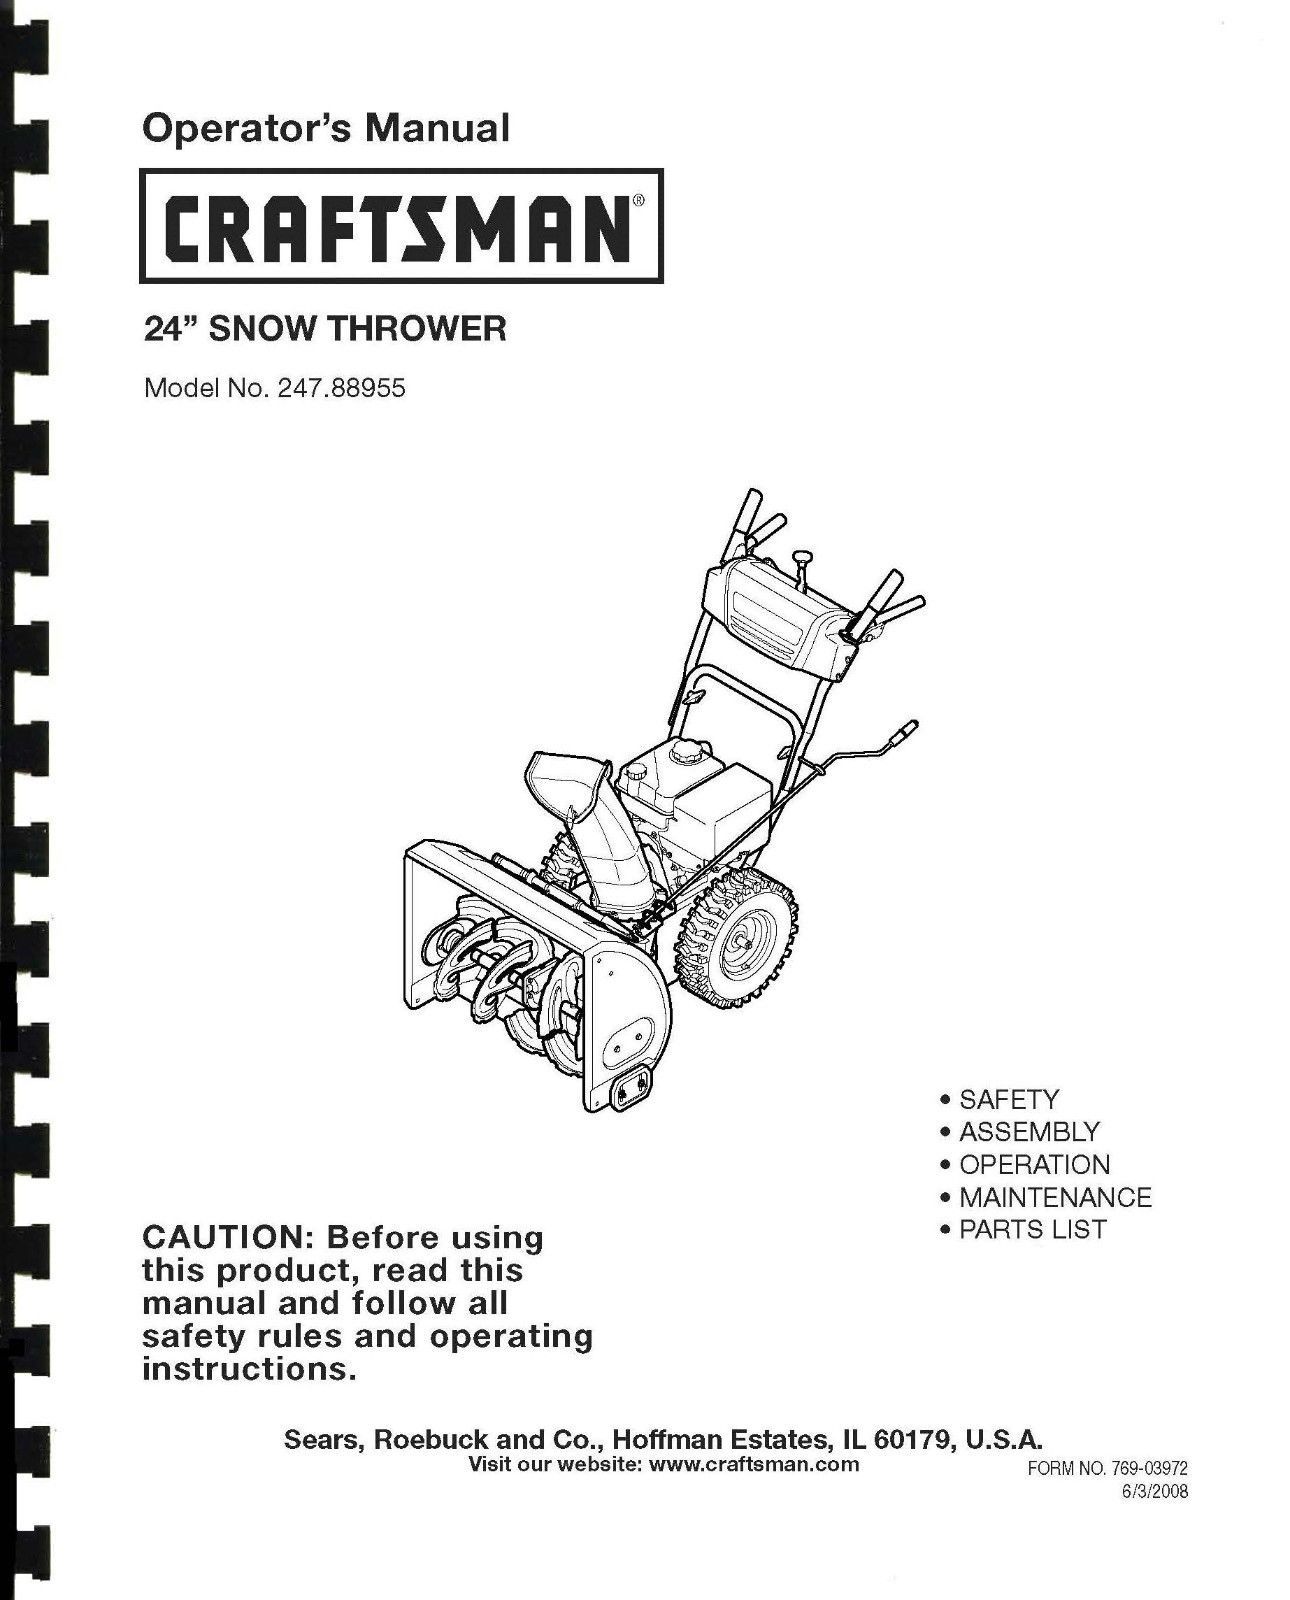 Craftsman Snow Thrower Operator's Manual Model No. 247.88955 - $12.50